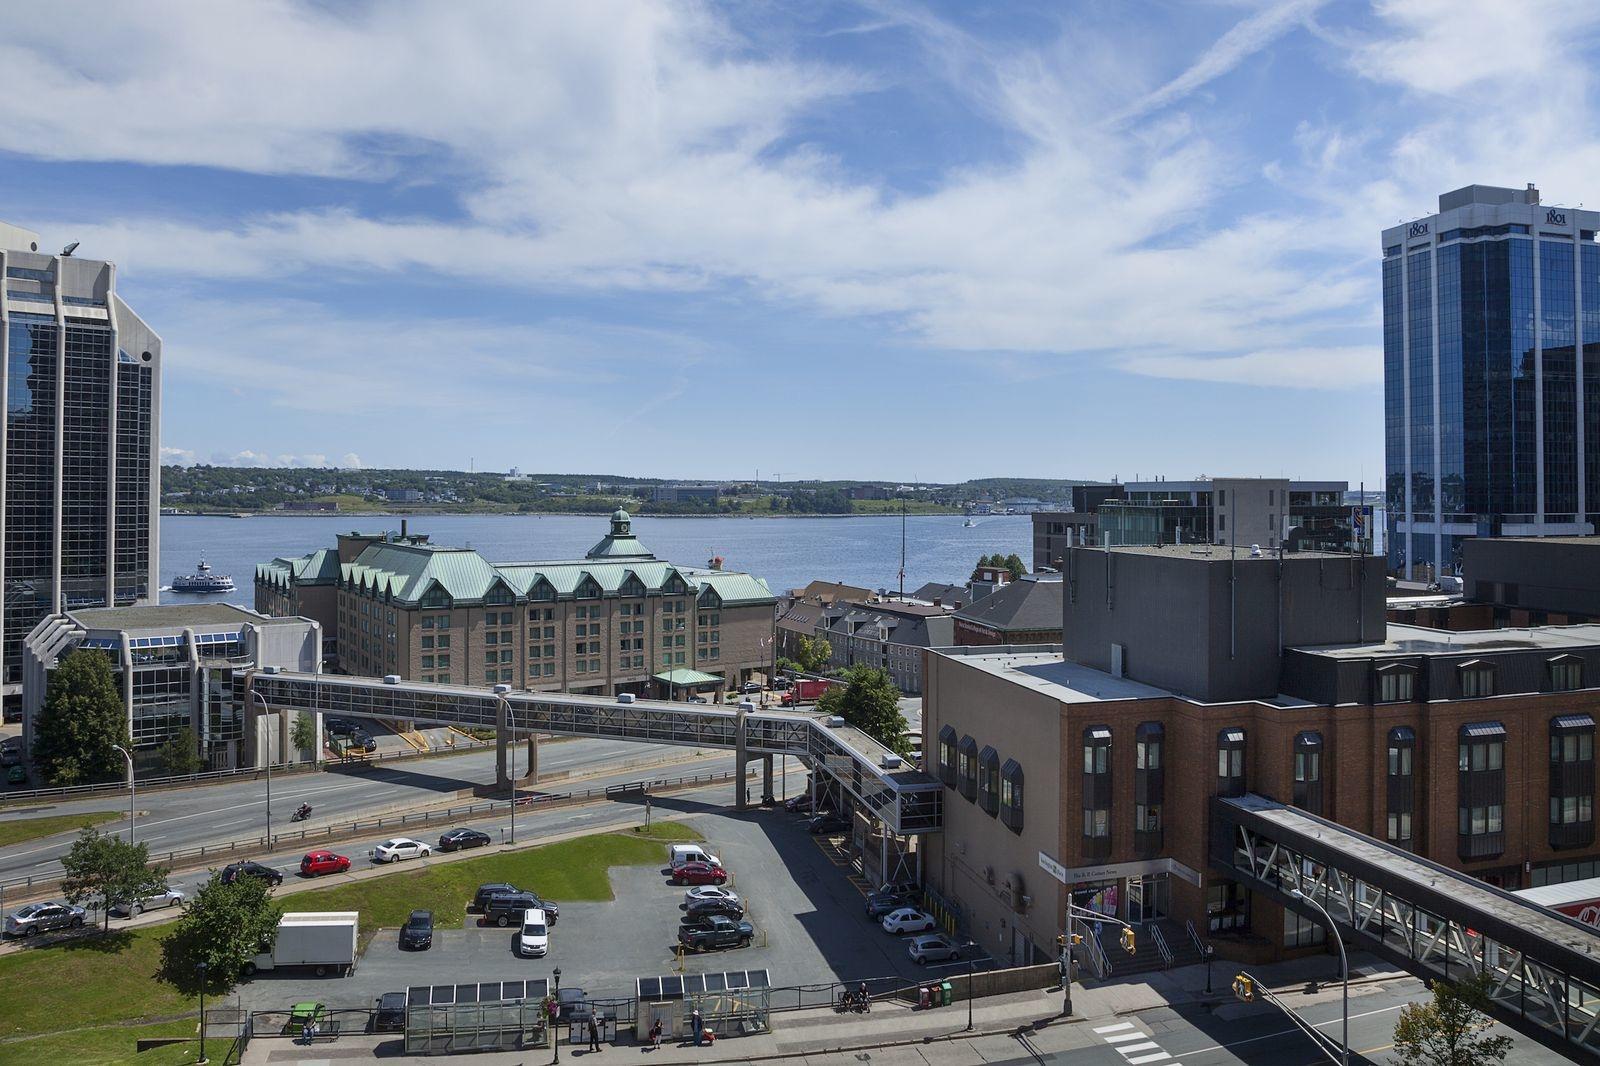 Hotel Halifax Exterior photo